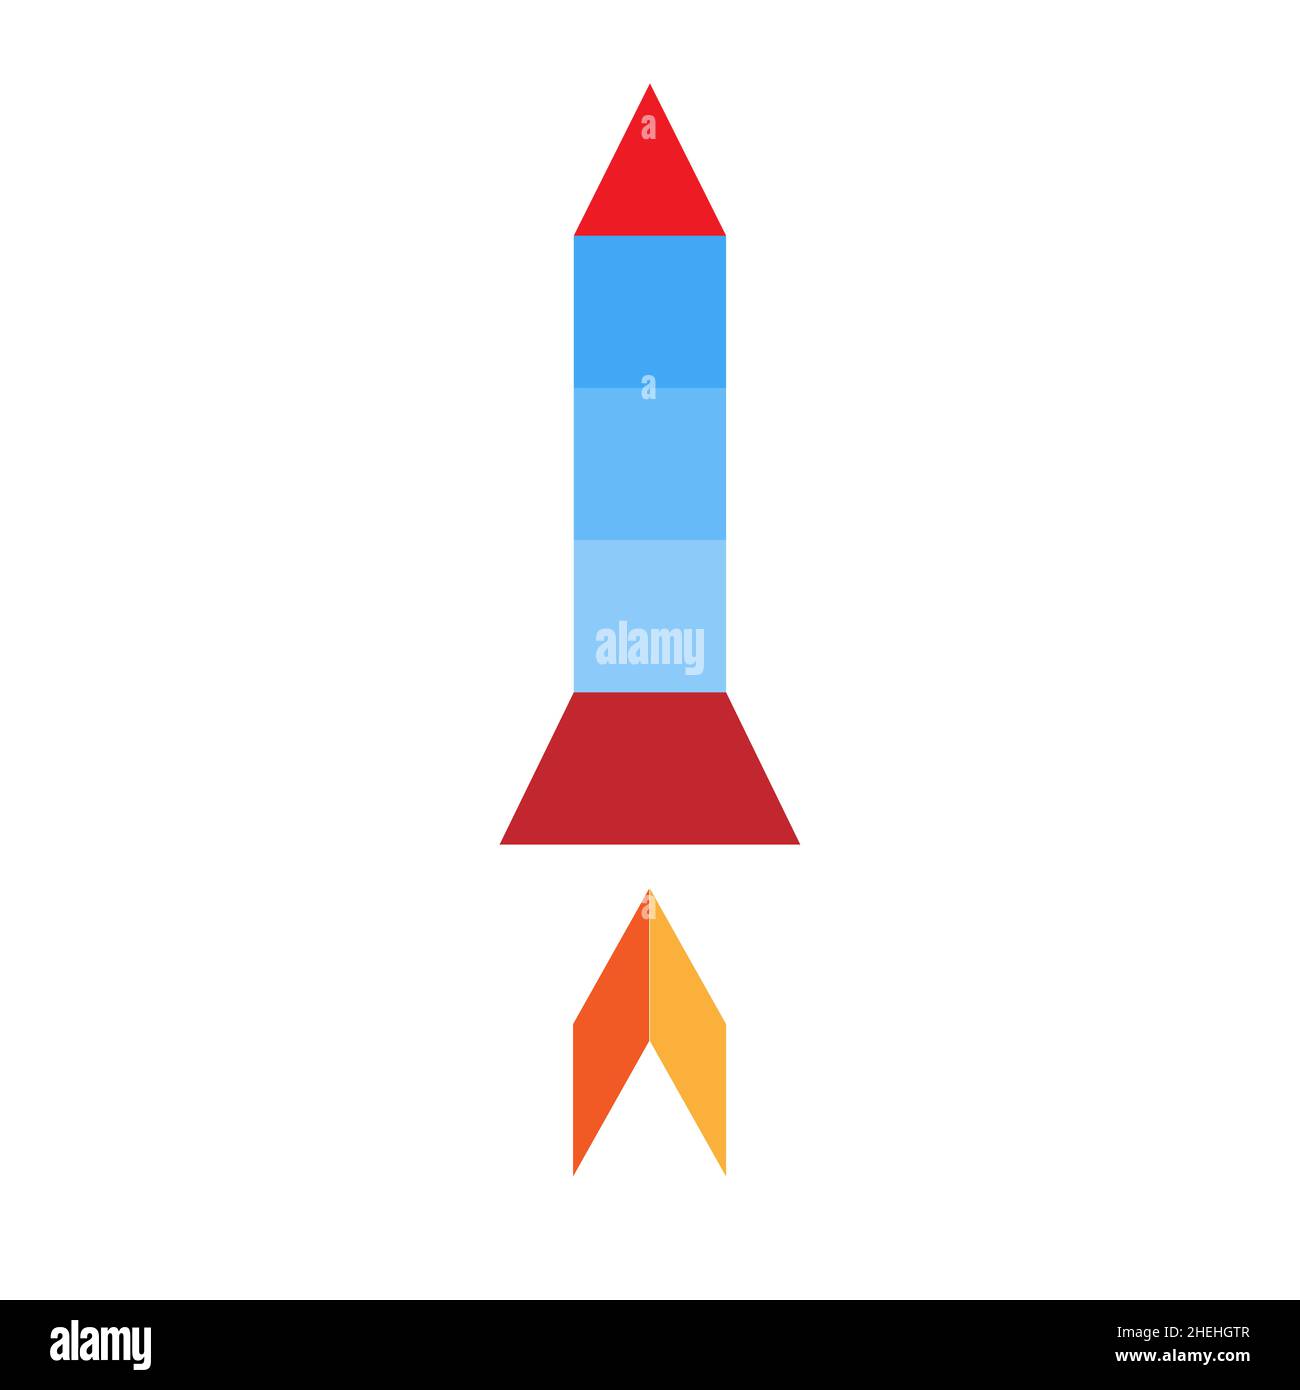 Rocket Blocks or shapes art illustration. Rocket clip art or image or logo  Stock Photo - Alamy